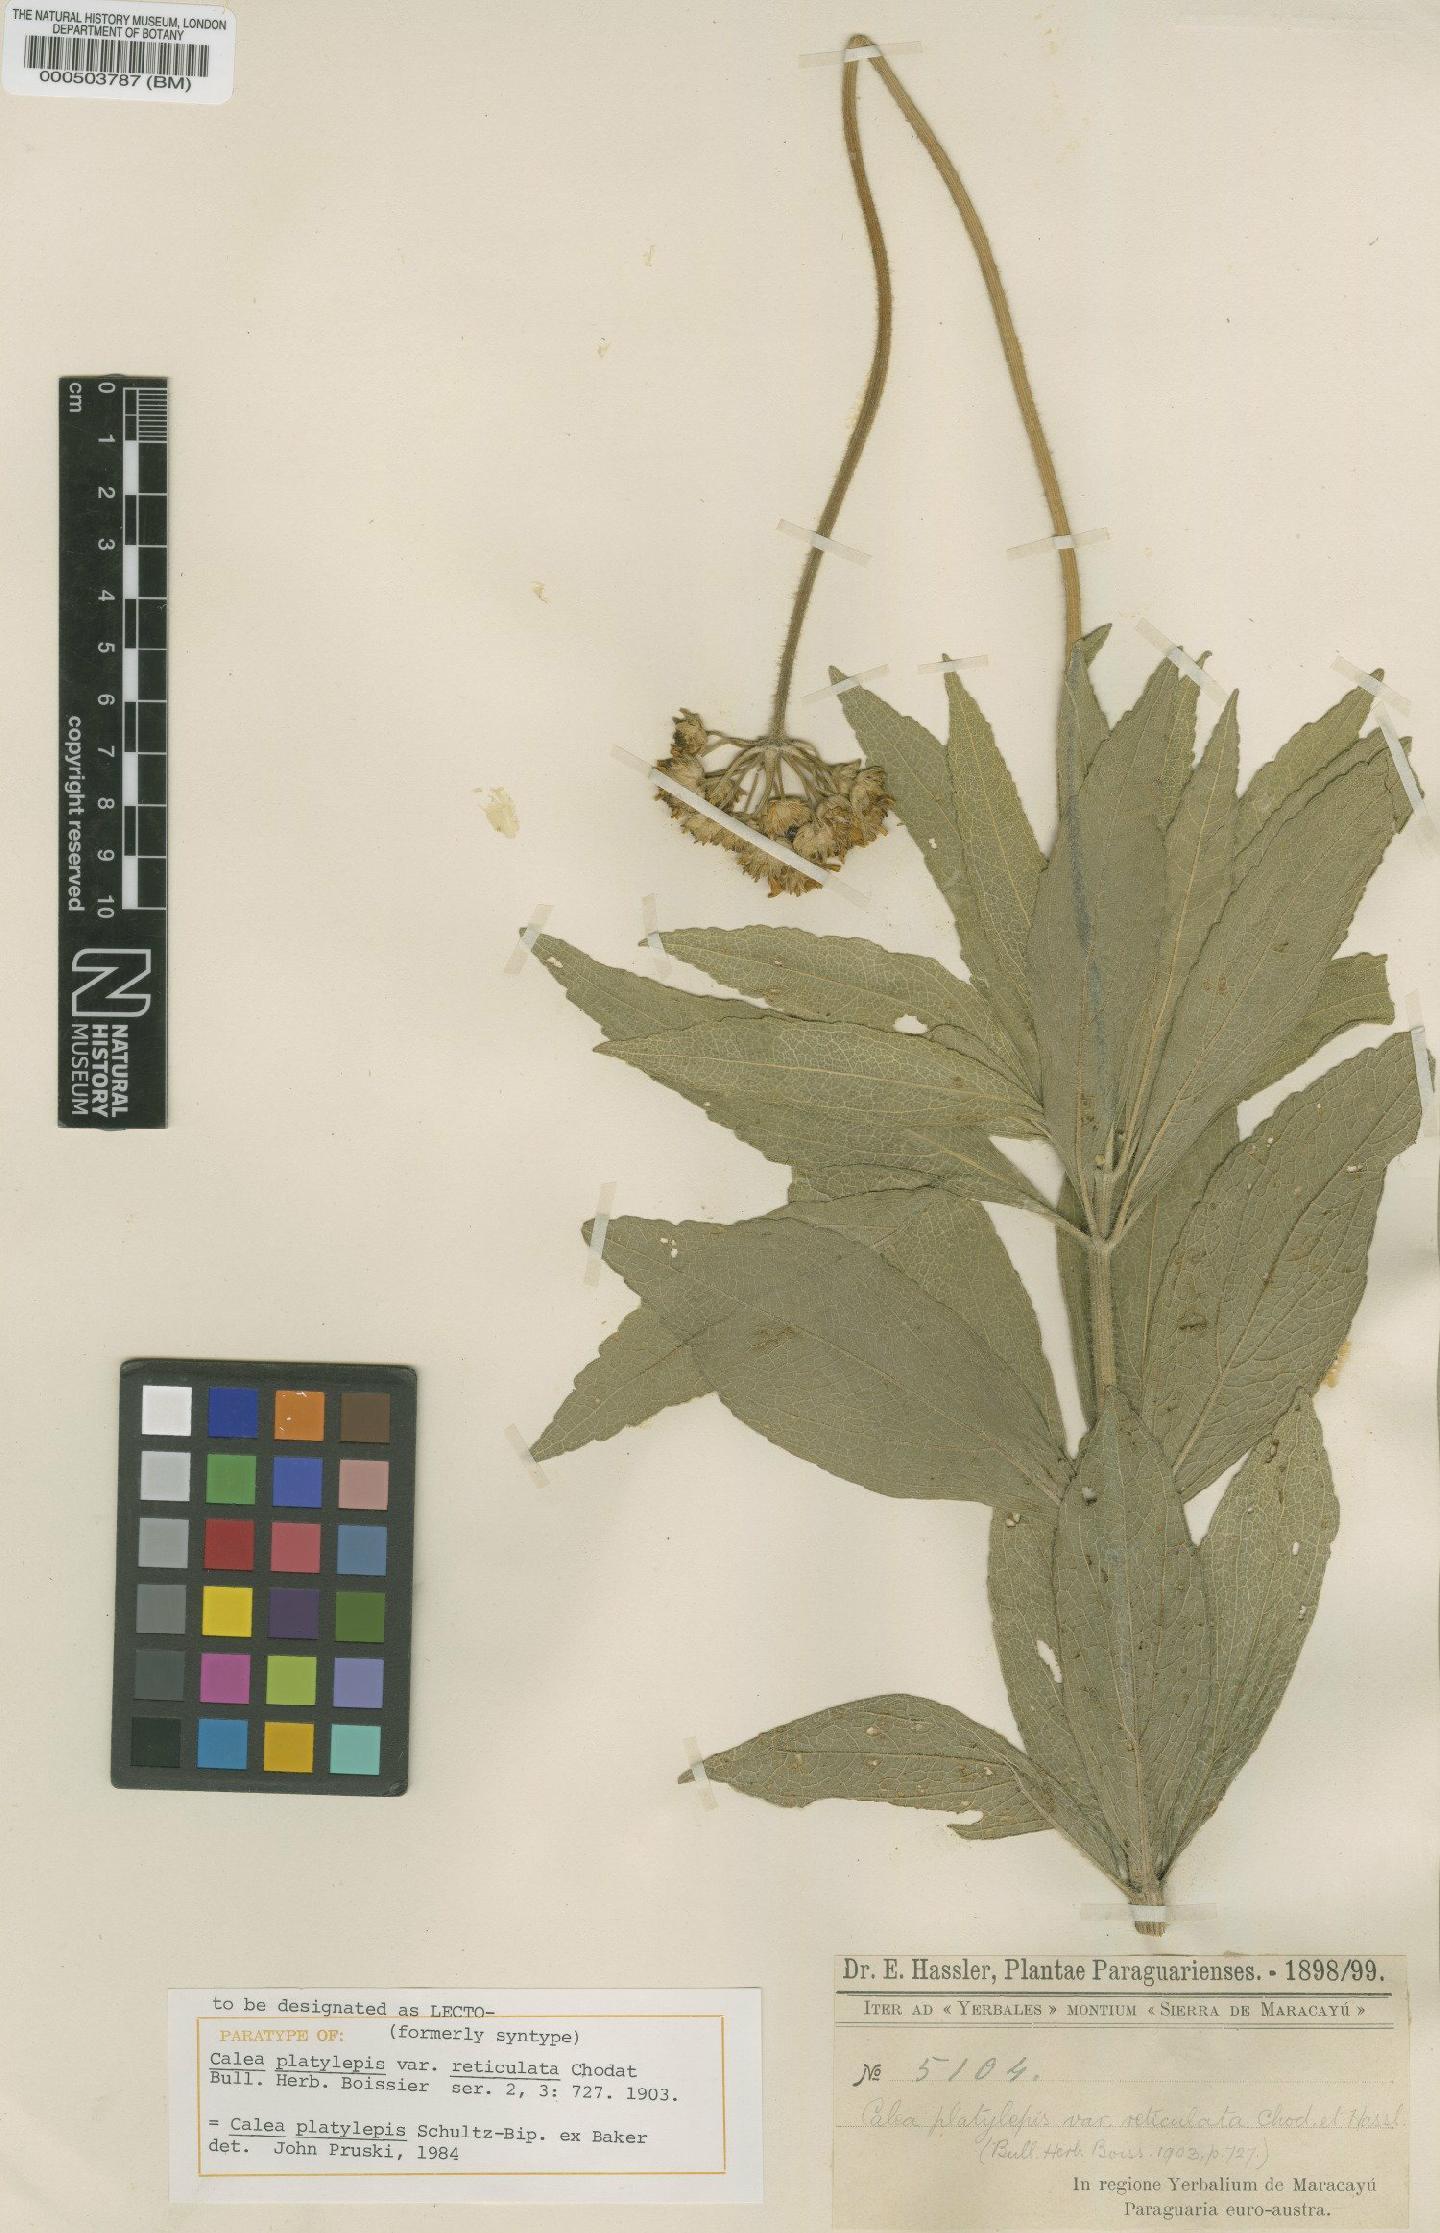 To NHMUK collection (Calea platylepis Sch.Bip. ex Baker; Paratype; NHMUK:ecatalogue:4566696)